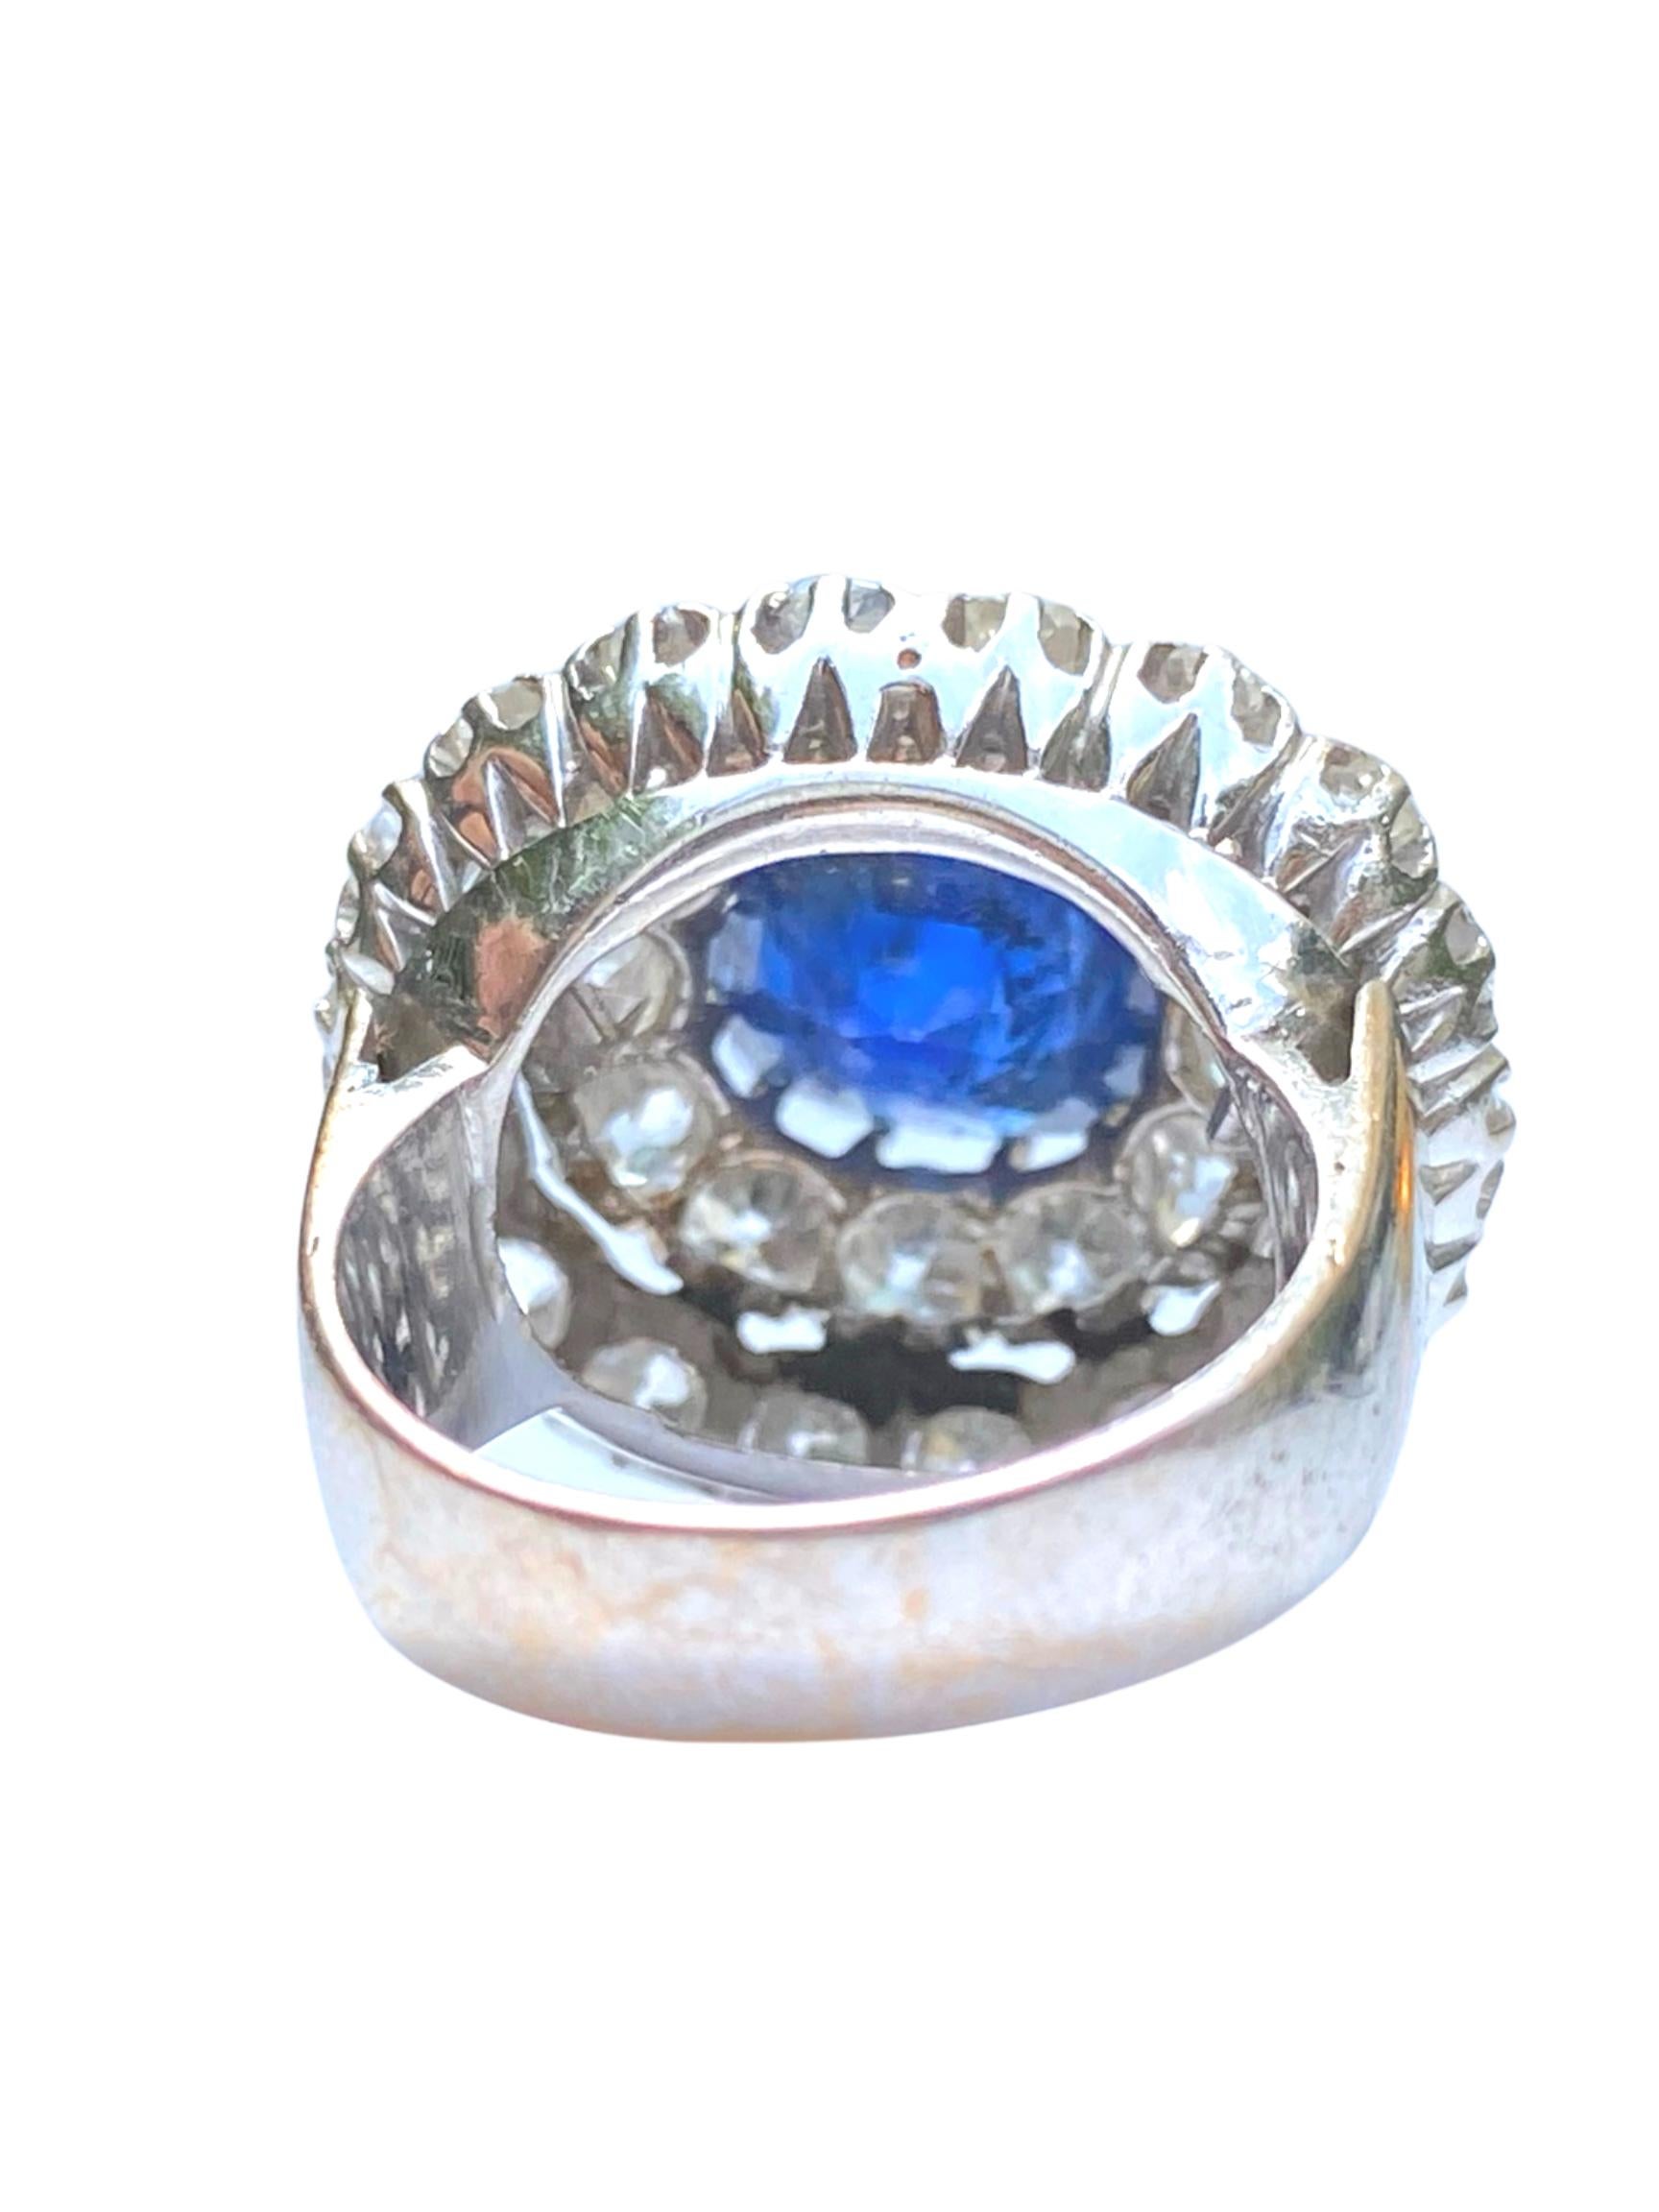 2.50 Carat Oval Cut Burma Sapphire and Diamond Victorian Era Platinum Ring For Sale 4